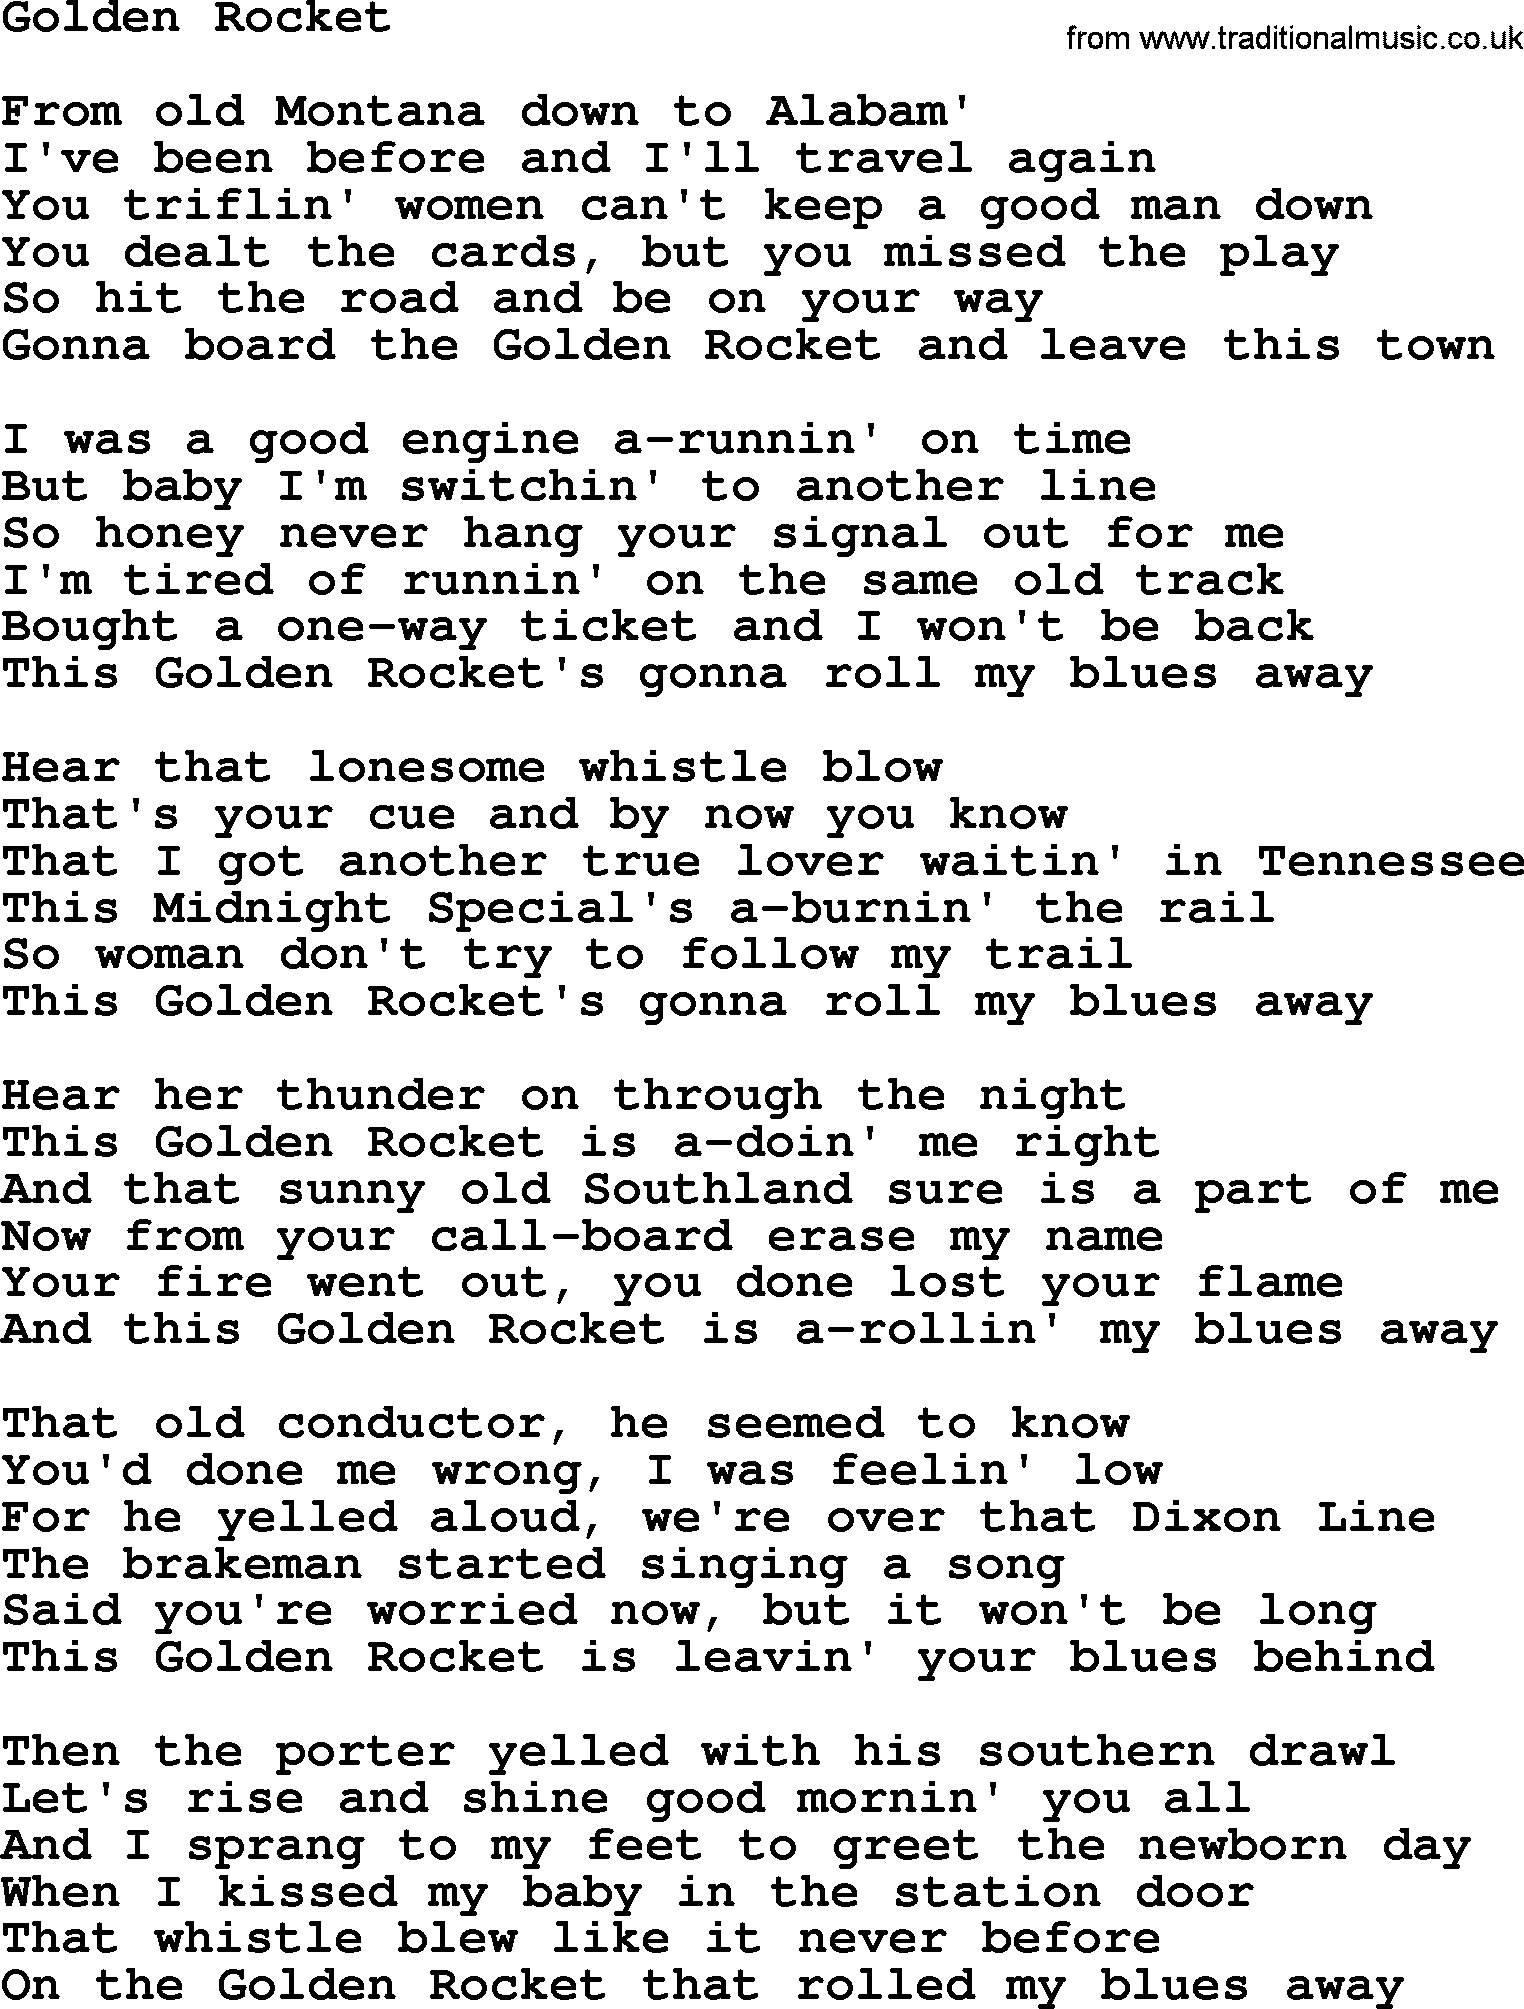 Willie Nelson song: Golden Rocket lyrics